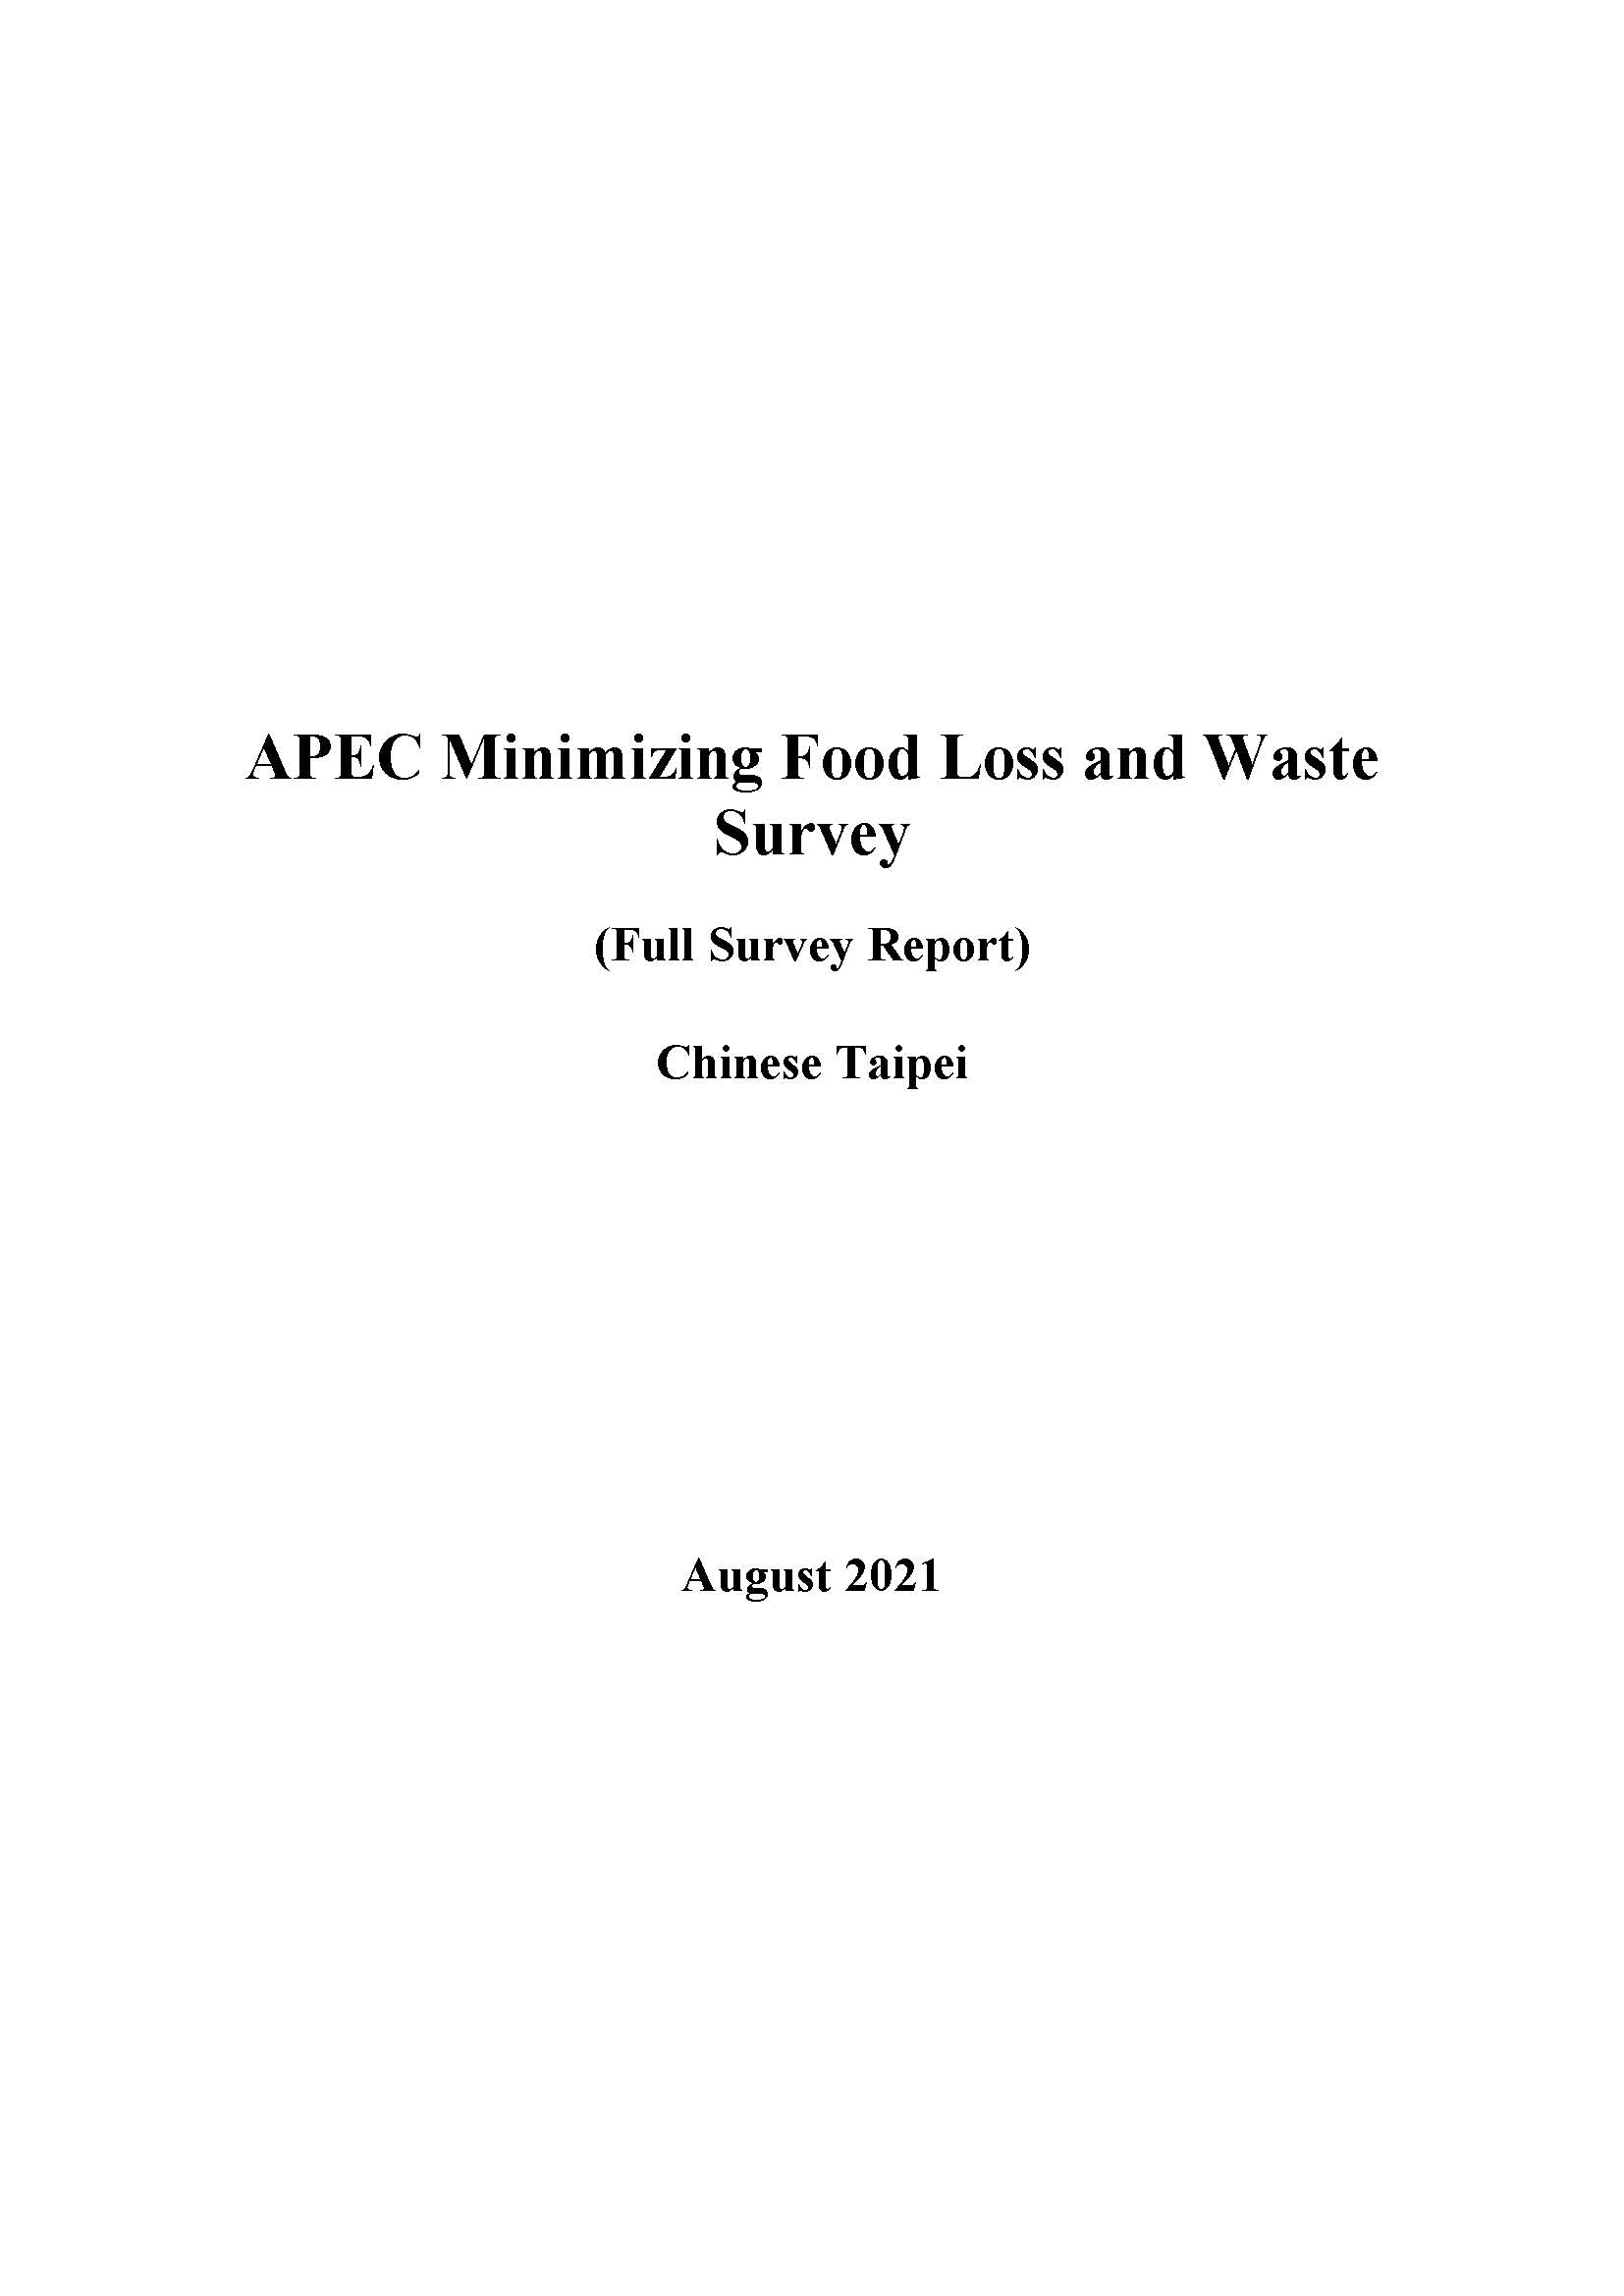 APEC Minimizing Food Loss and Waste Survey（2021）